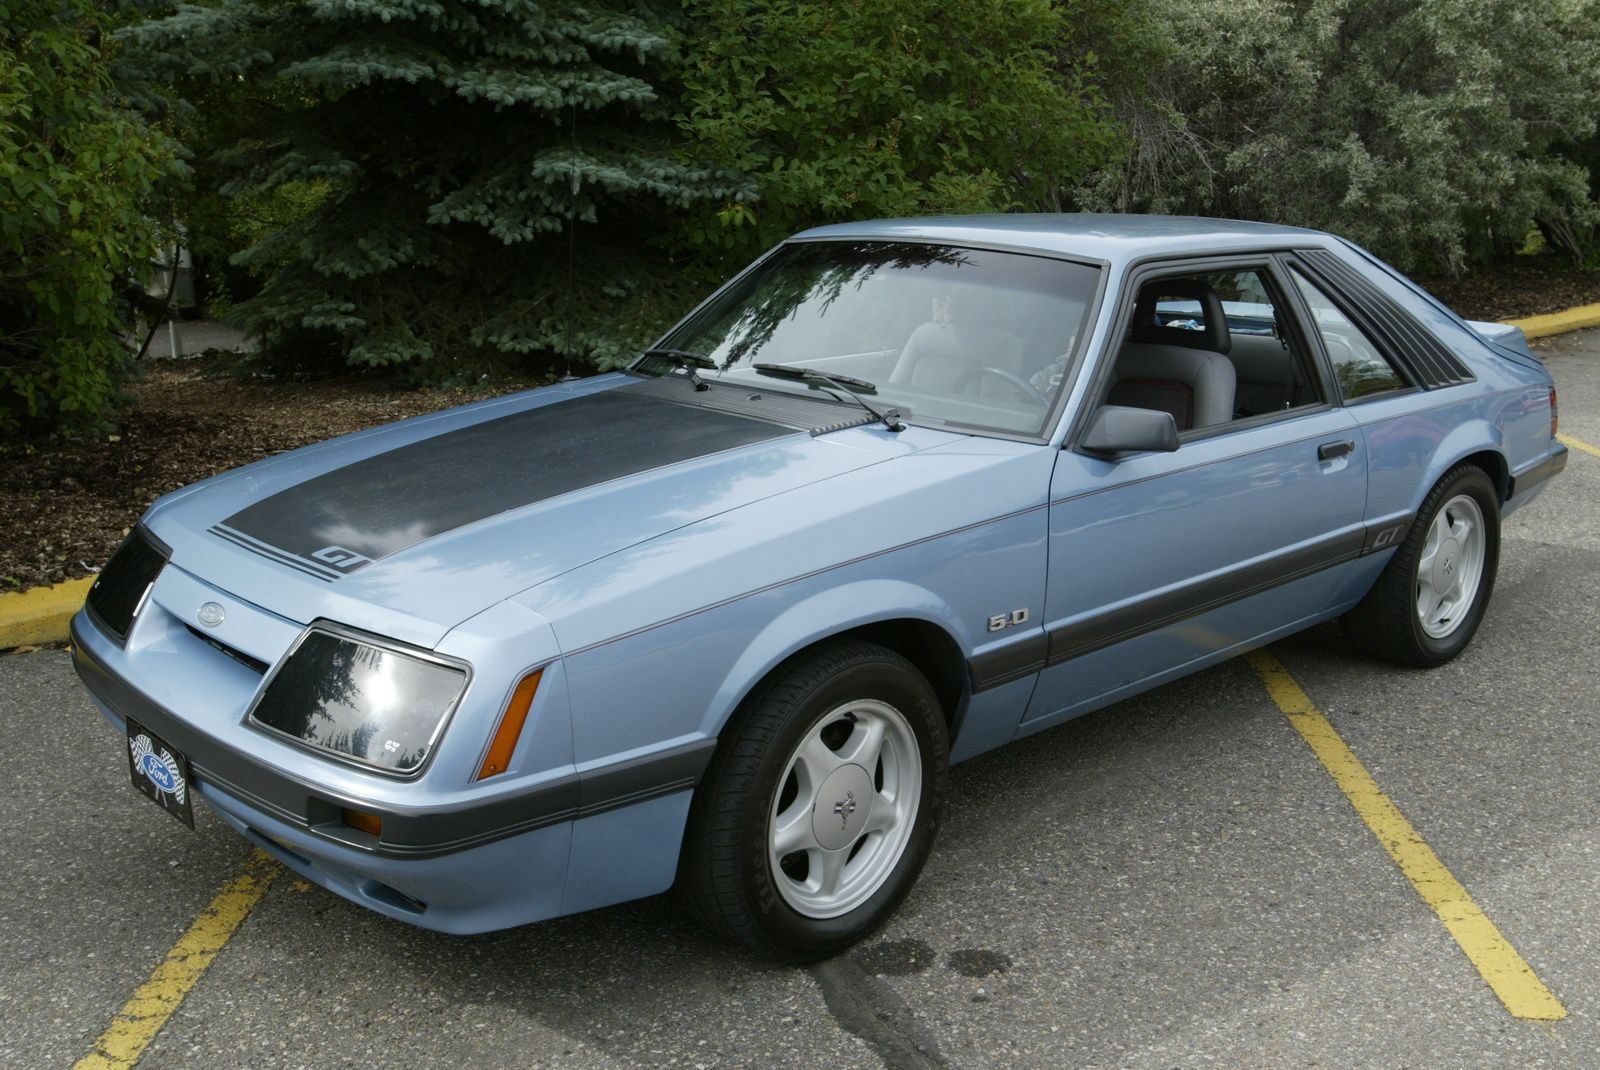 Ford Mustang GT azul de 1985